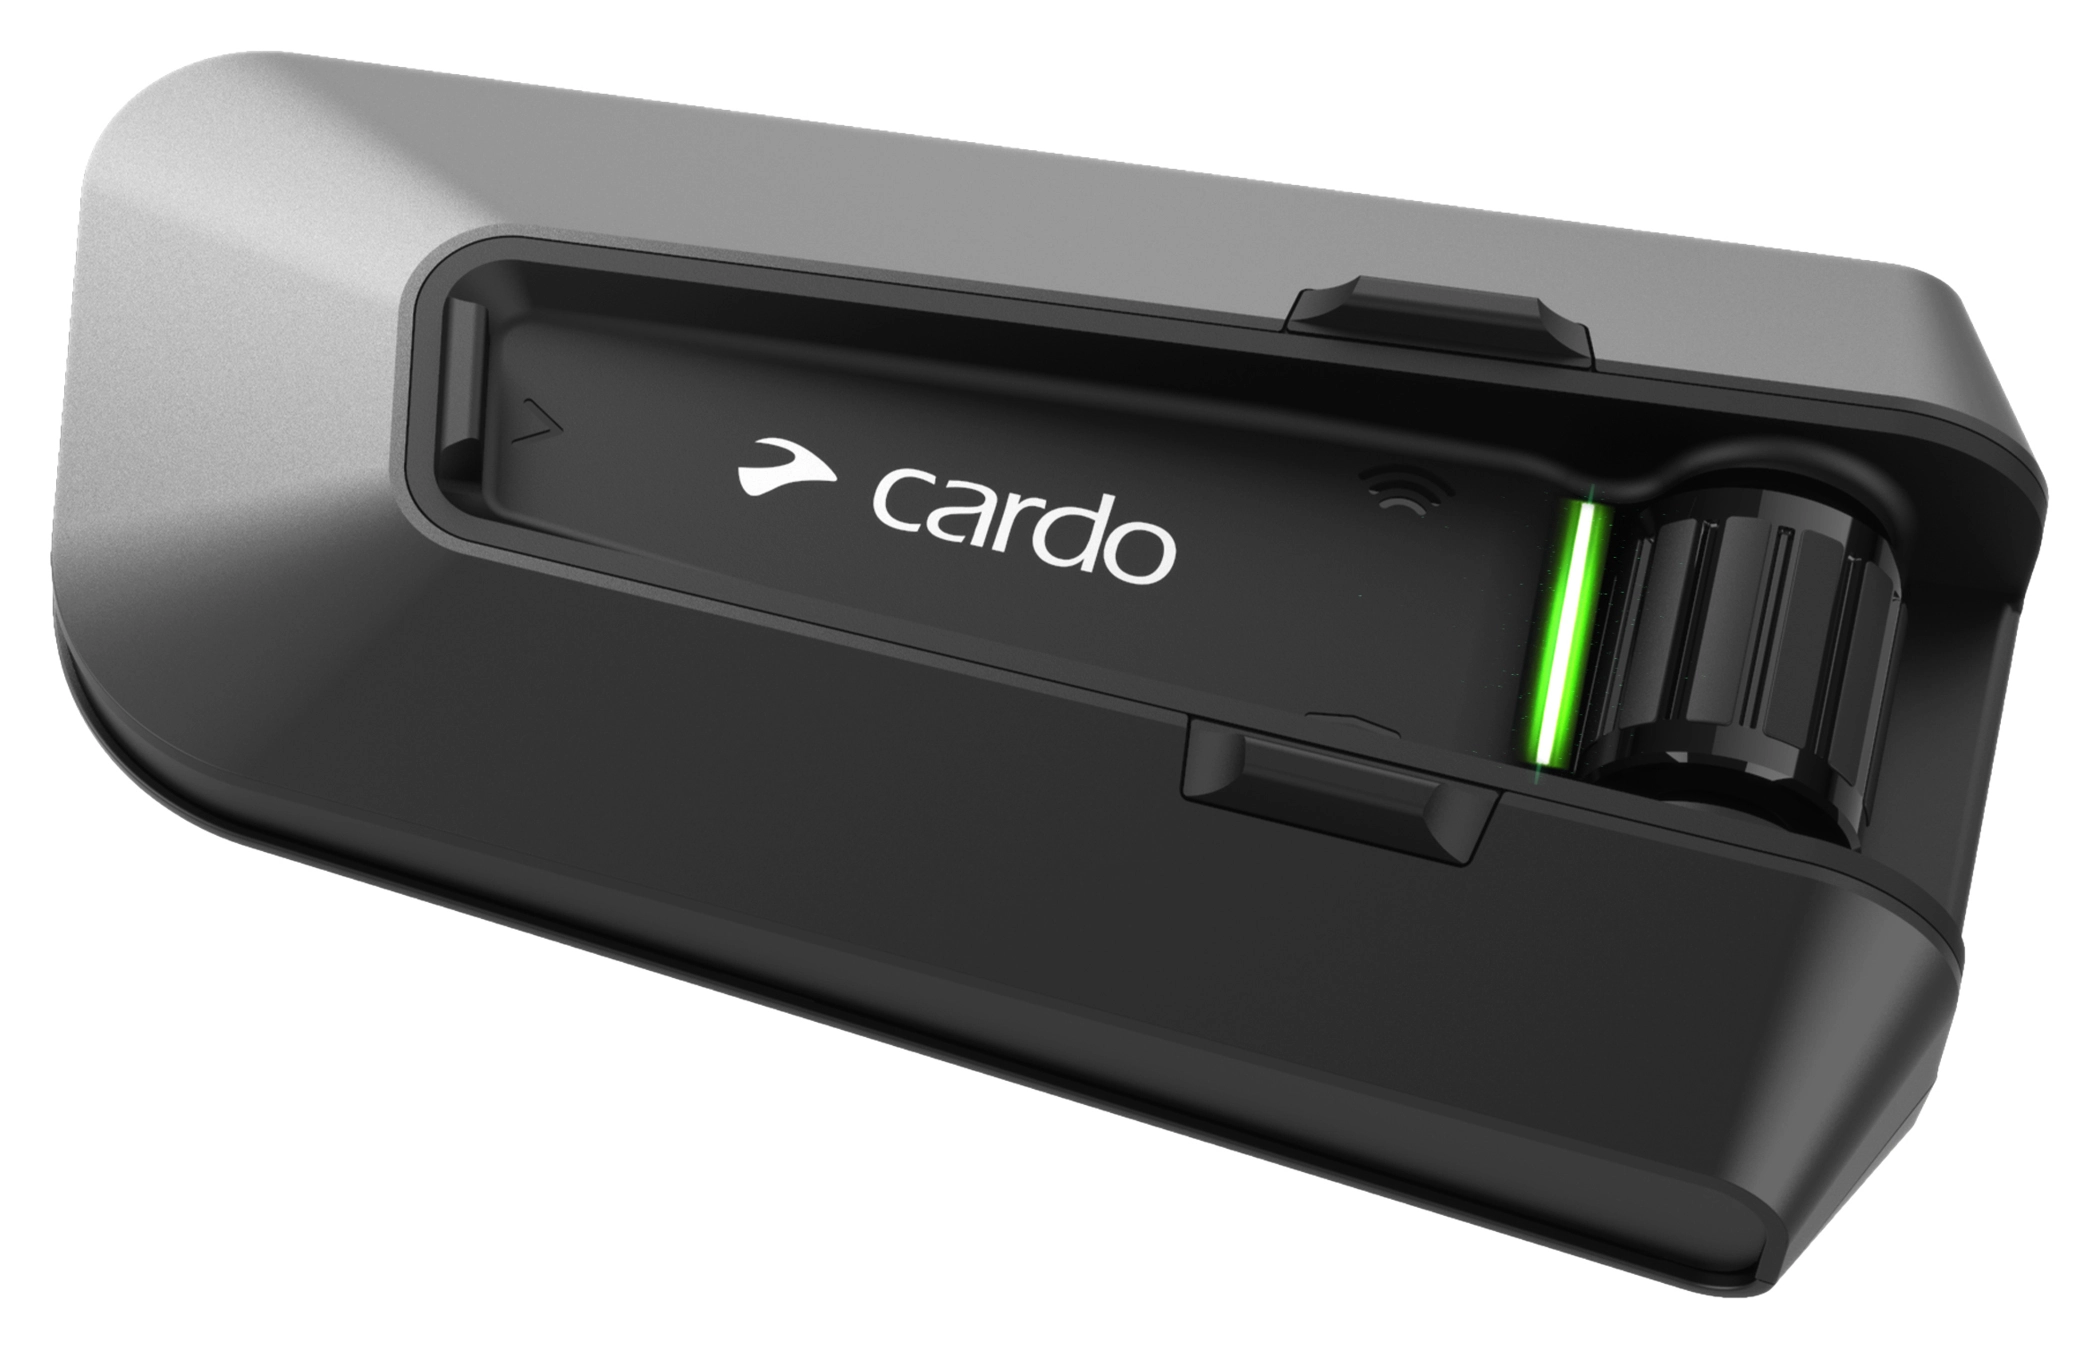 CARDO Packtalk Edge Duo - Intercom moto